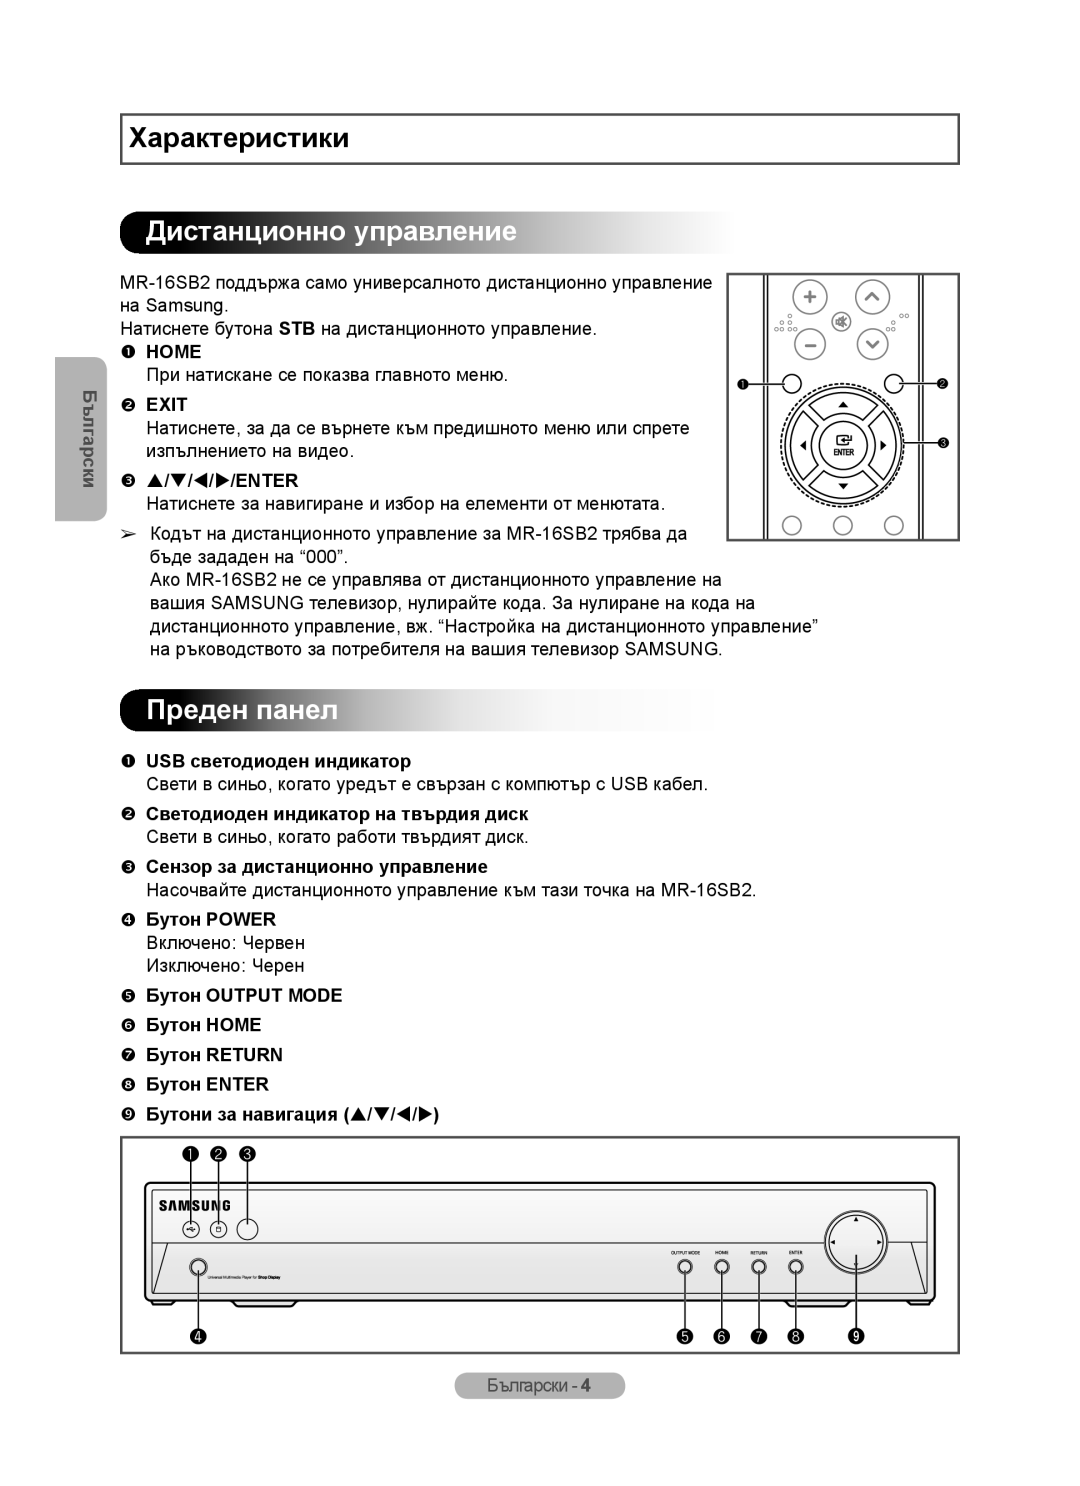 Samsung MR-16SB2 Характеристики, Дистанционно управление, Преден панел,  Home,  Exit,  ////Enter,  Бутон POWER 